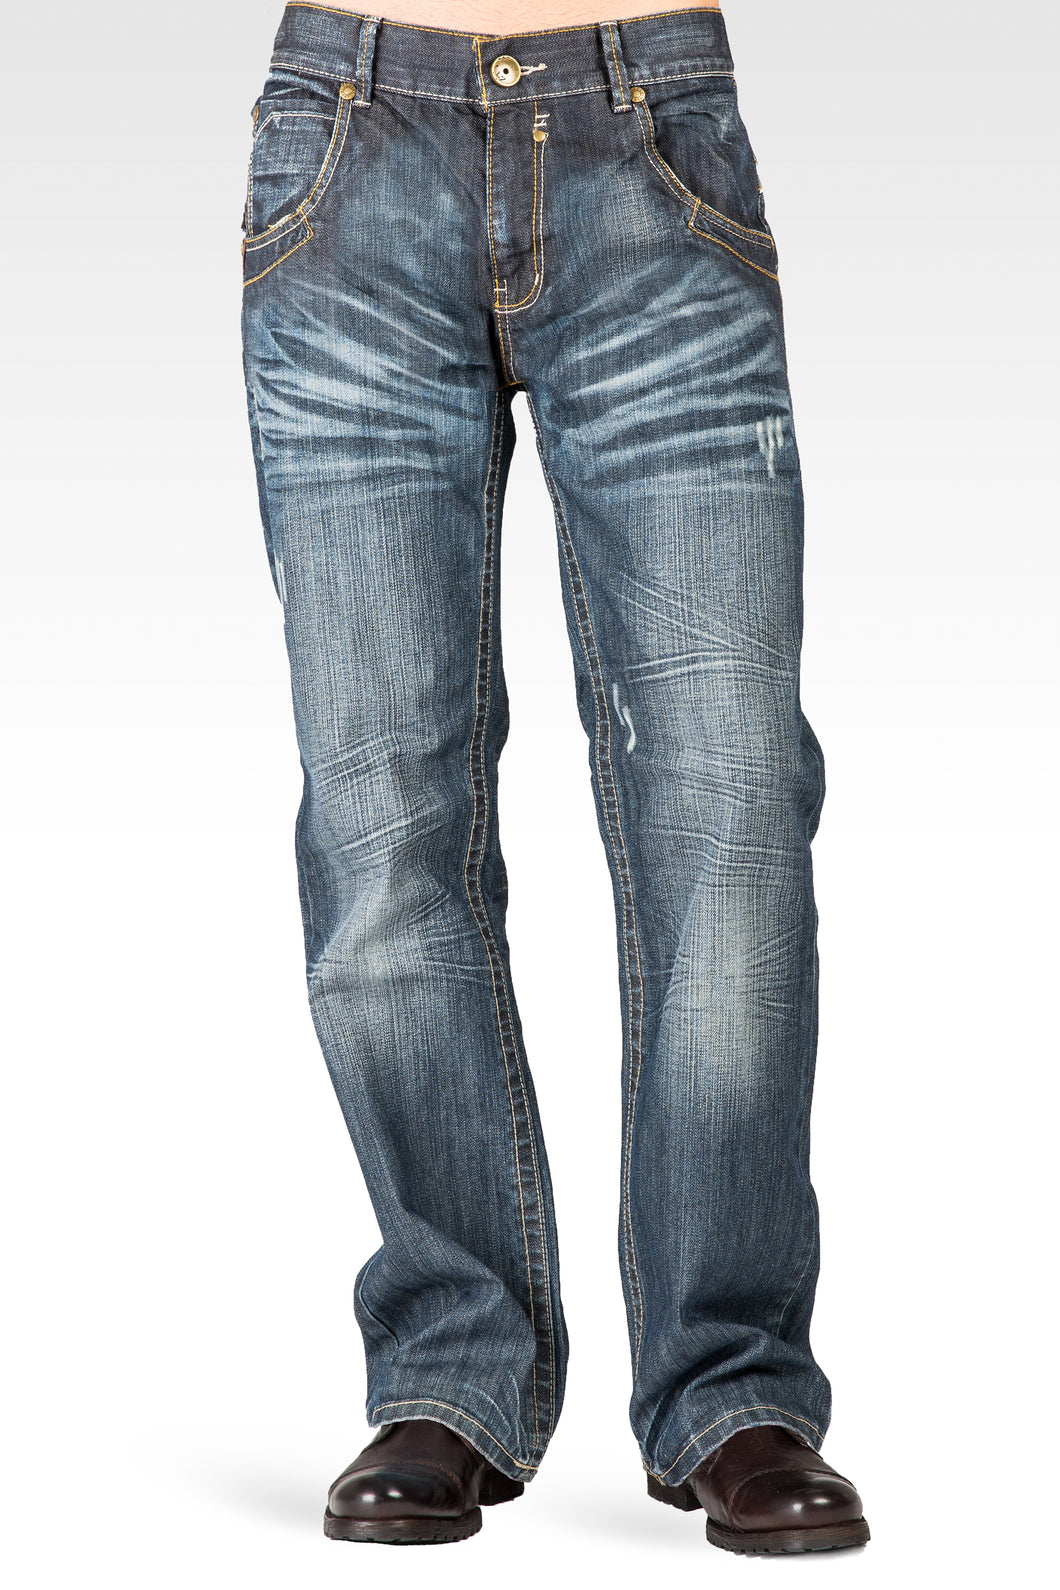 denim jeans bootcut